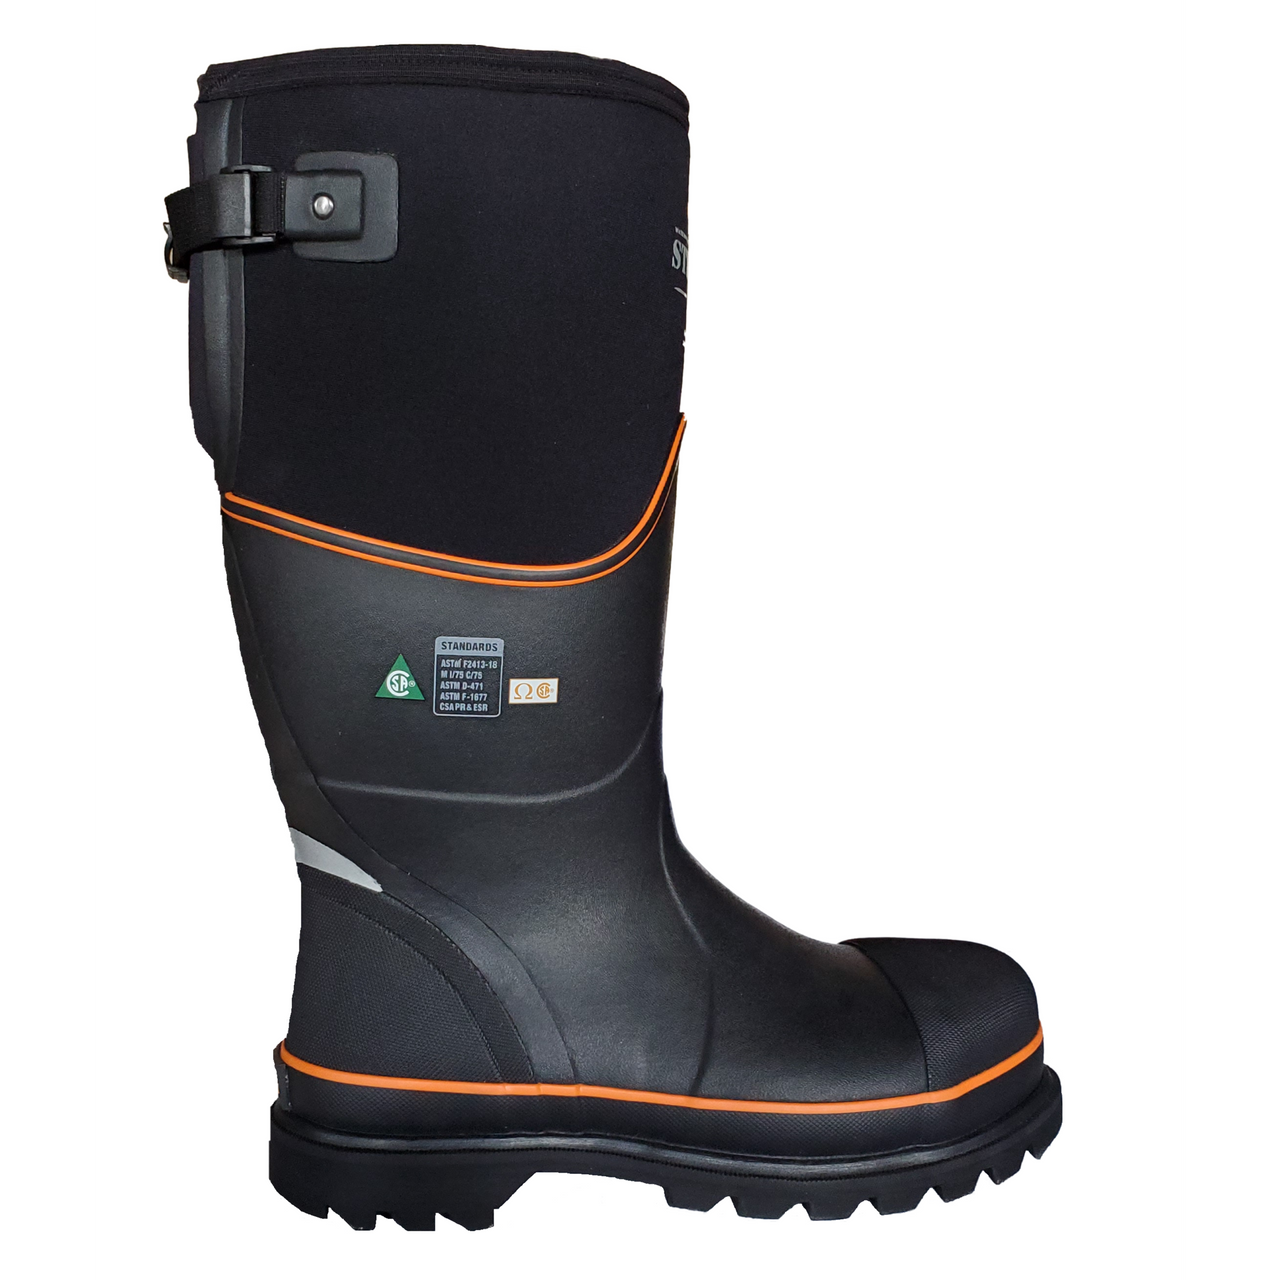 Dryshod Unisex Steel Toe Max Gusset CSA High Boots - Black/Orange